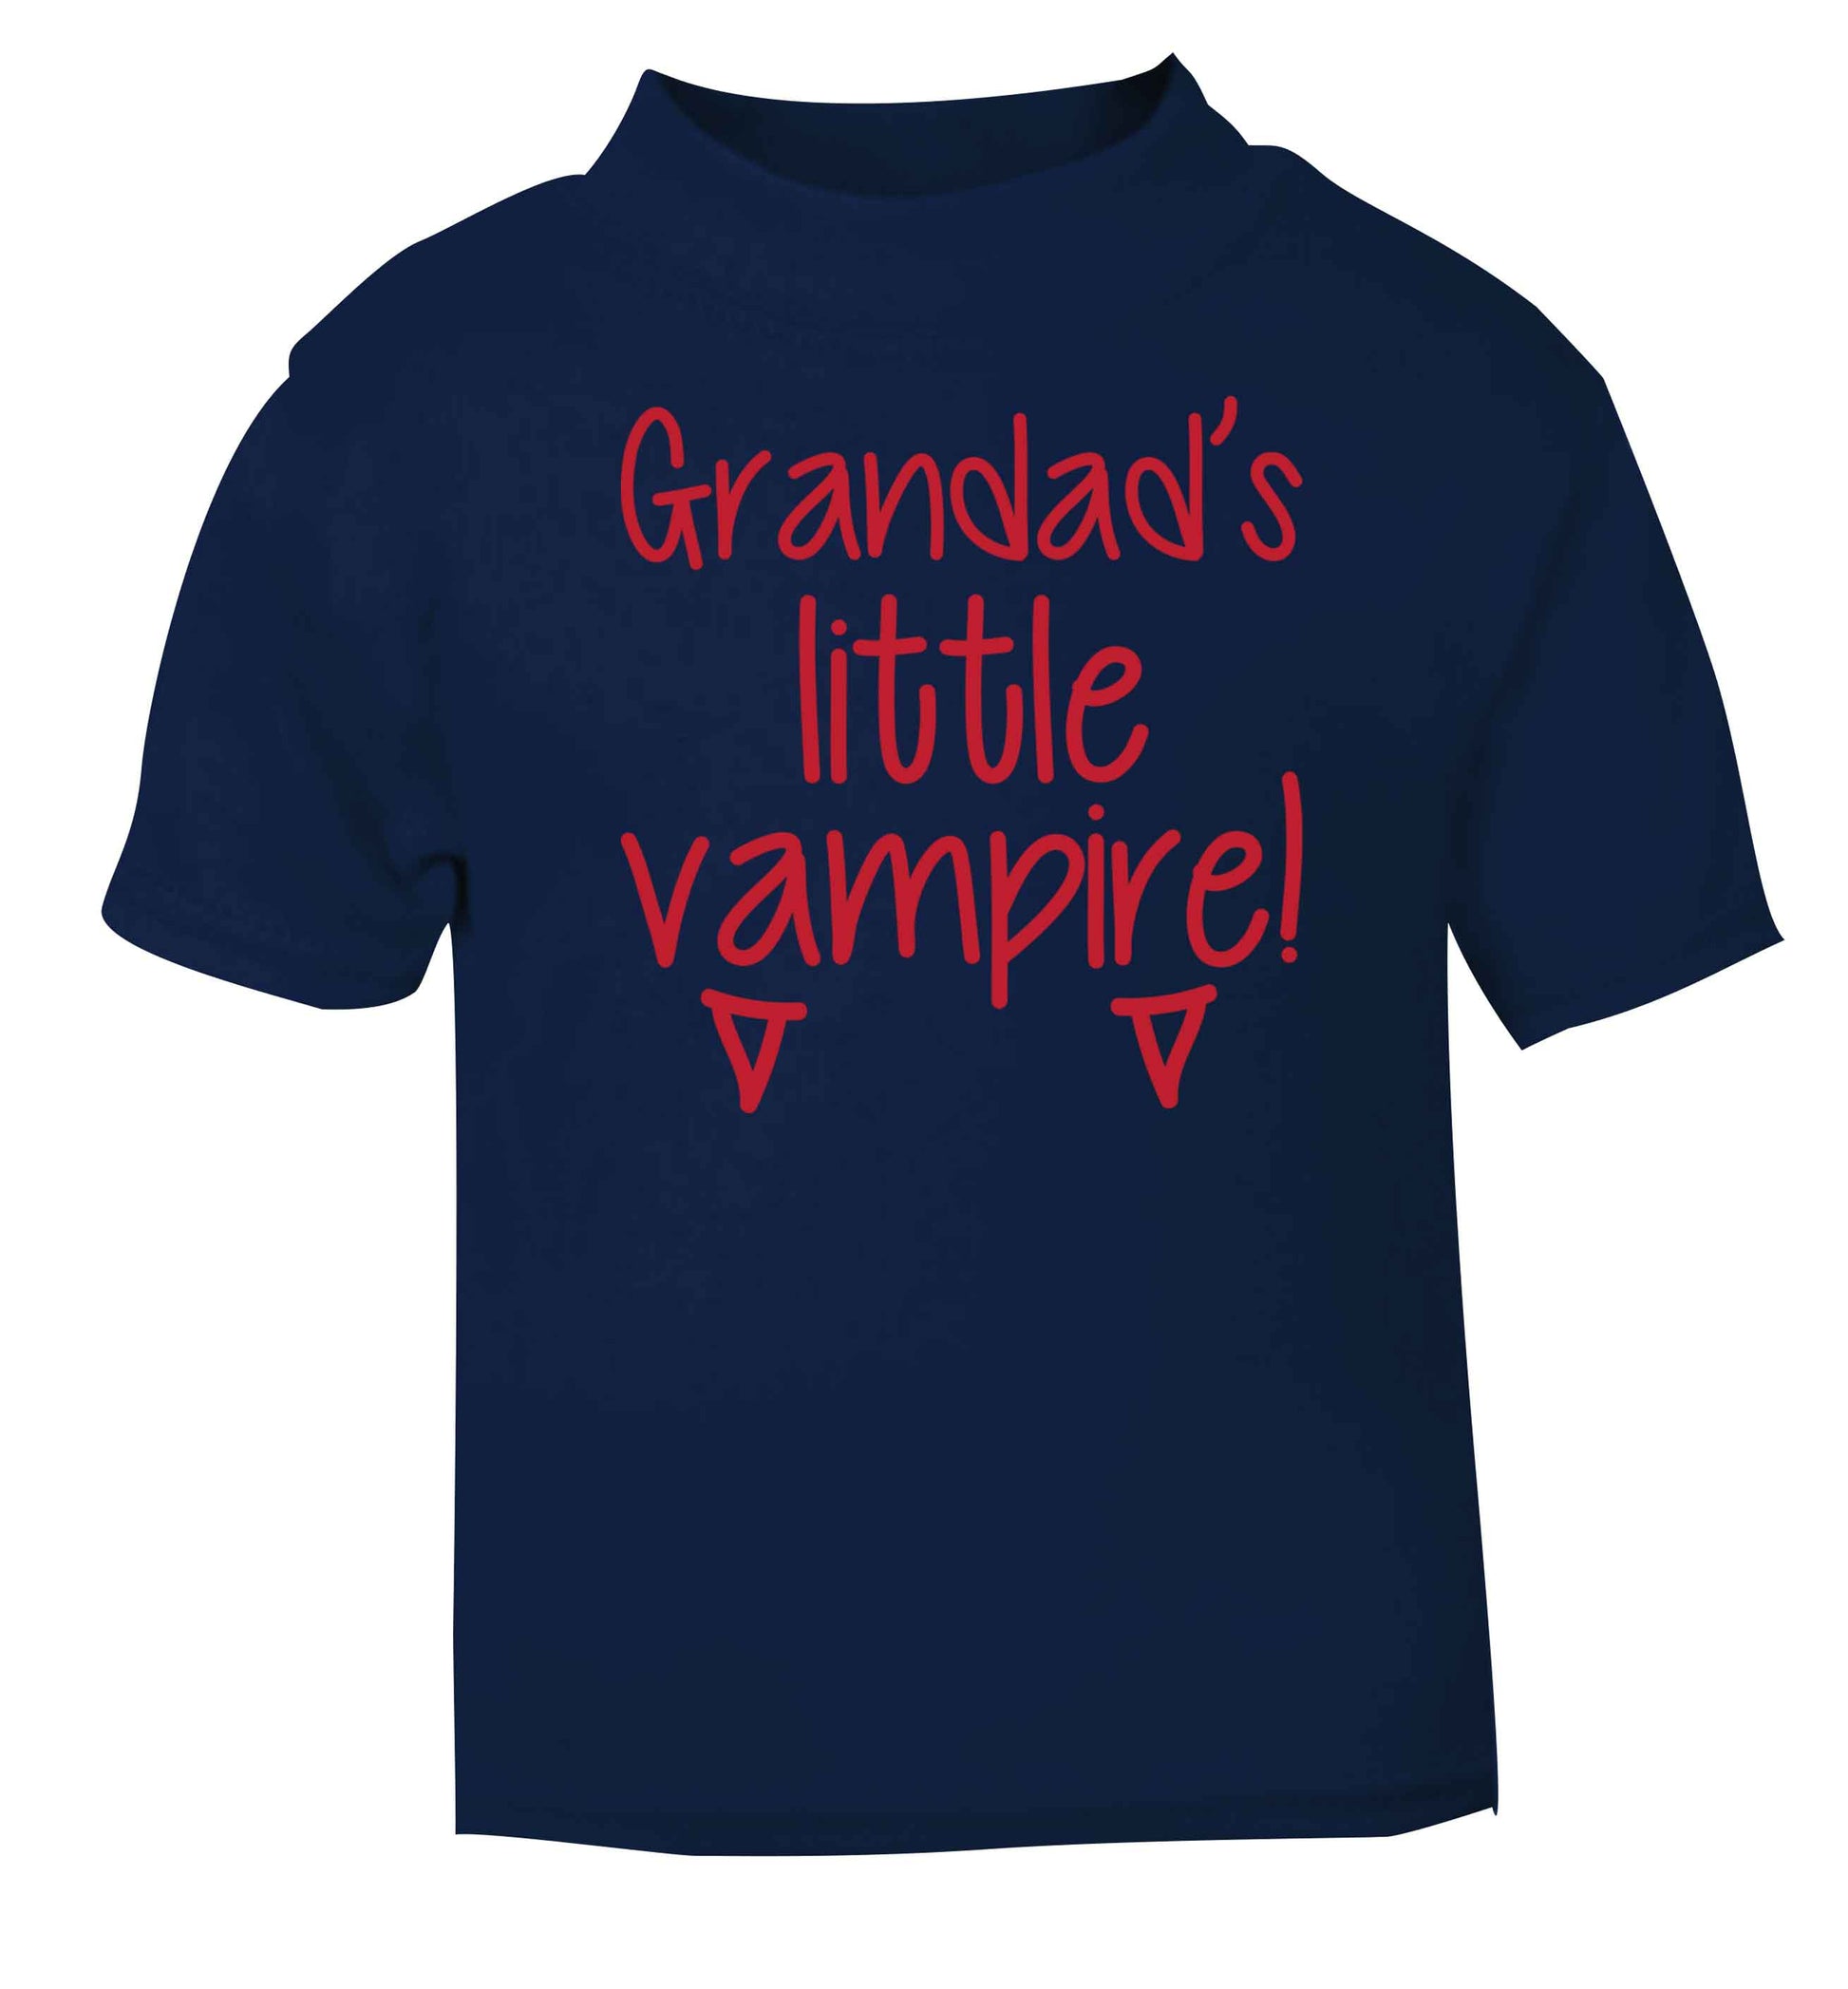 Grandad's little vampire navy baby toddler Tshirt 2 Years